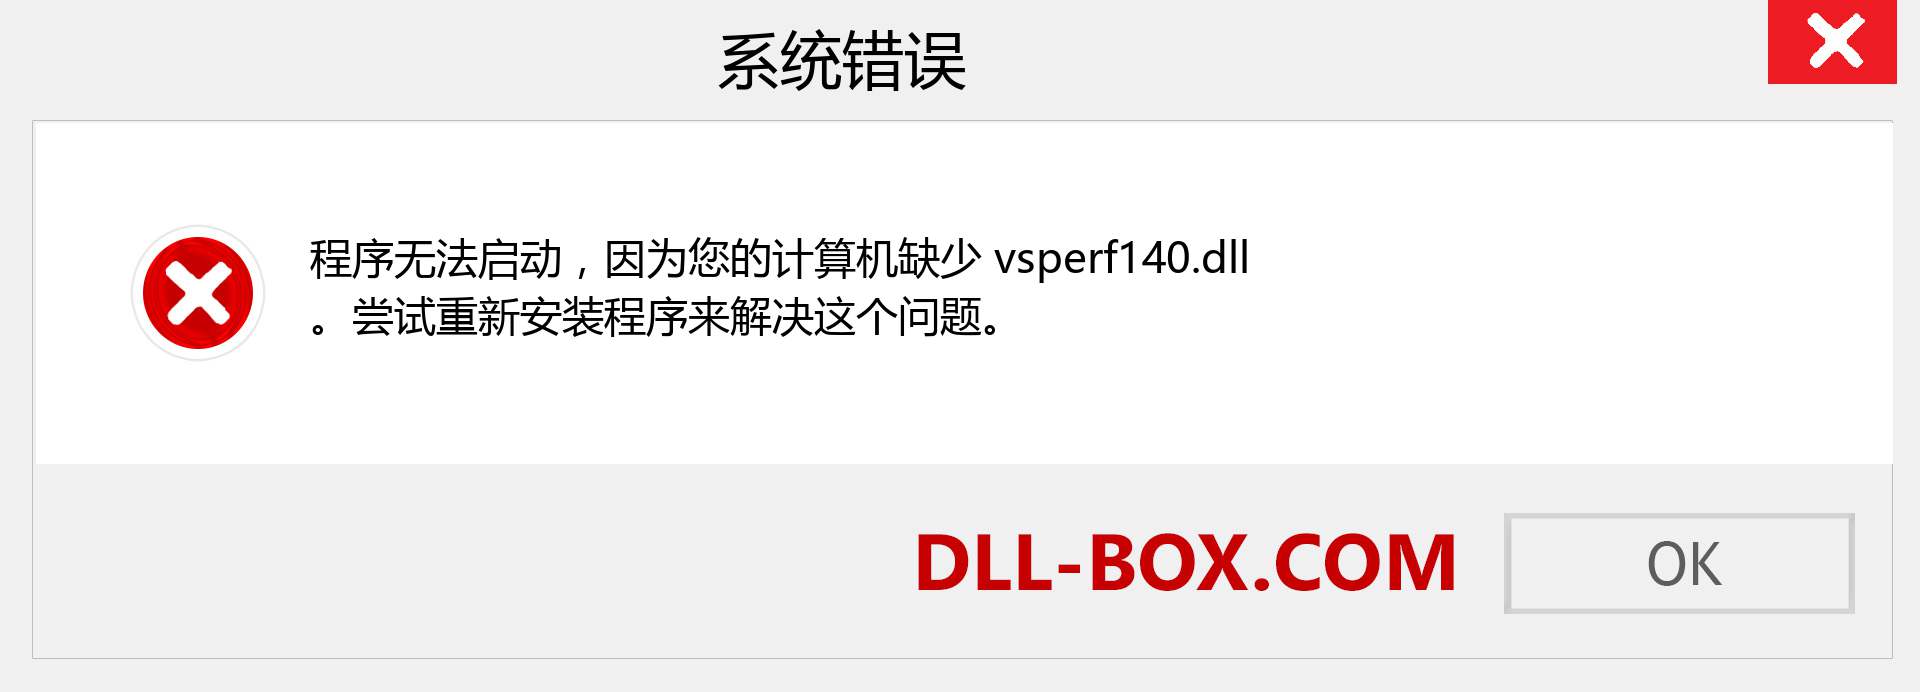 vsperf140.dll 文件丢失？。 适用于 Windows 7、8、10 的下载 - 修复 Windows、照片、图像上的 vsperf140 dll 丢失错误